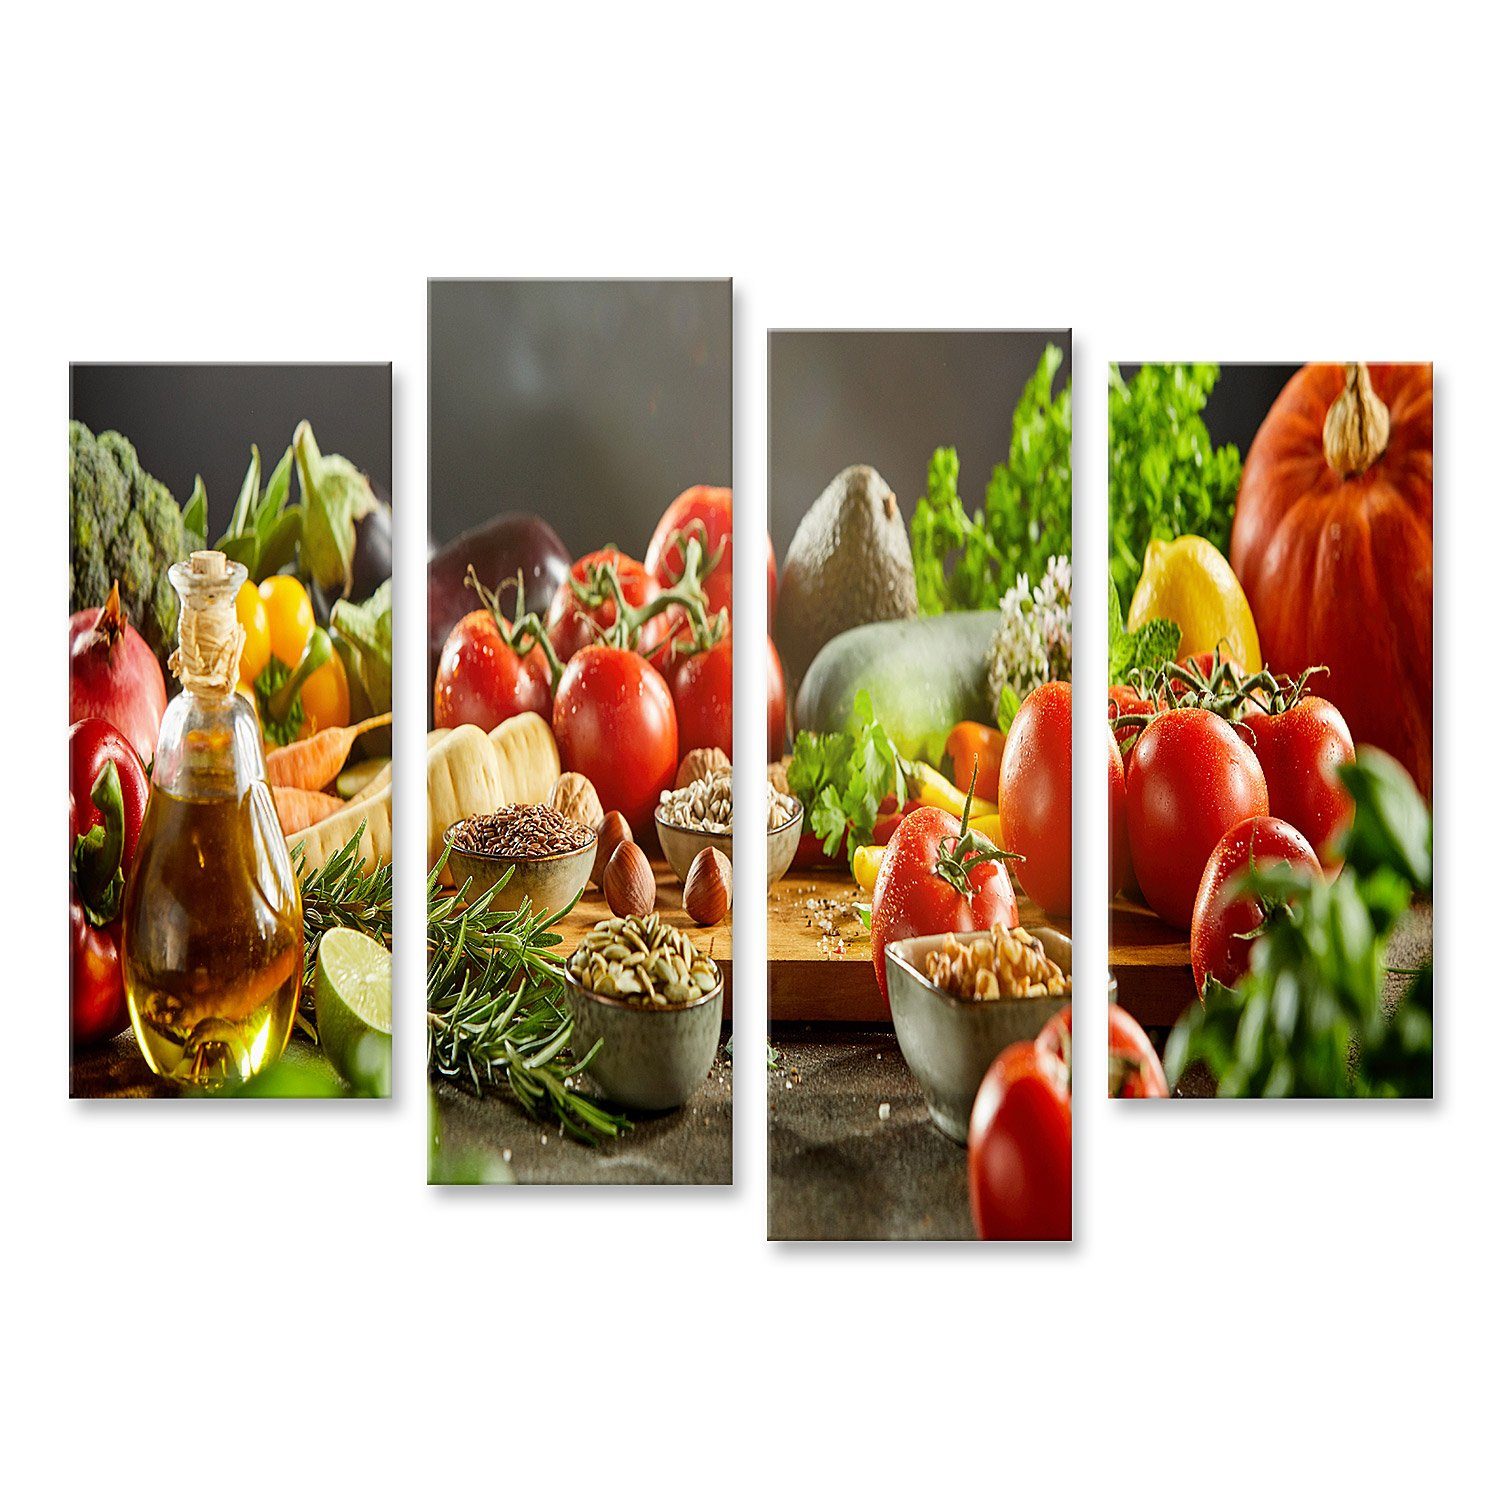 islandburner Leinwandbild Bild auf Leinwand Lebensmittel Sortiert Küchenbild Auberginen Karotten